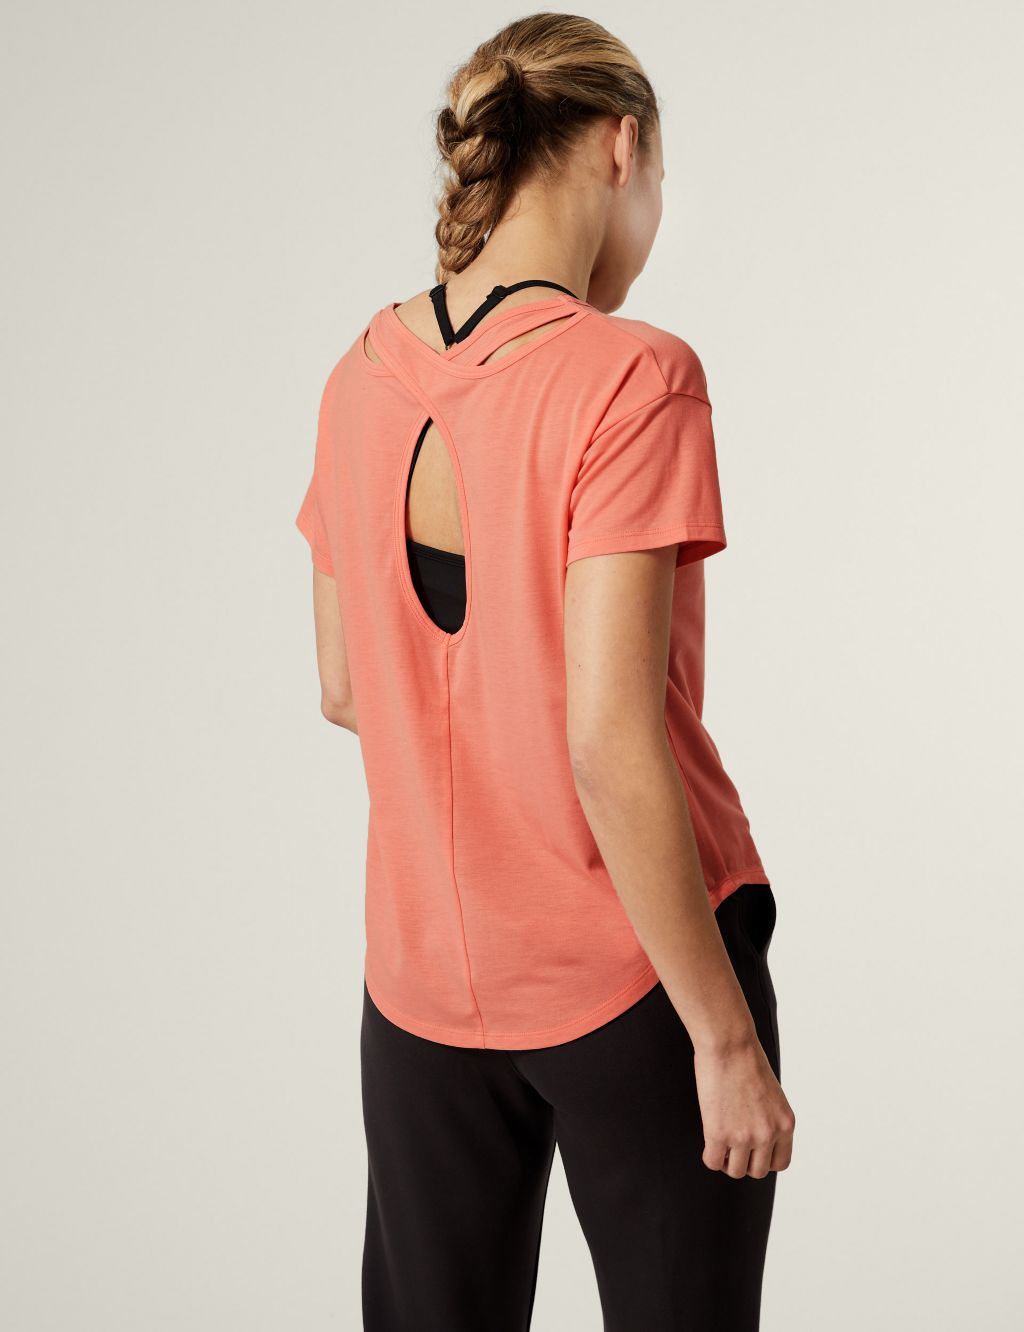 Scoop Neck Cross Back Yoga T-Shirt image 3